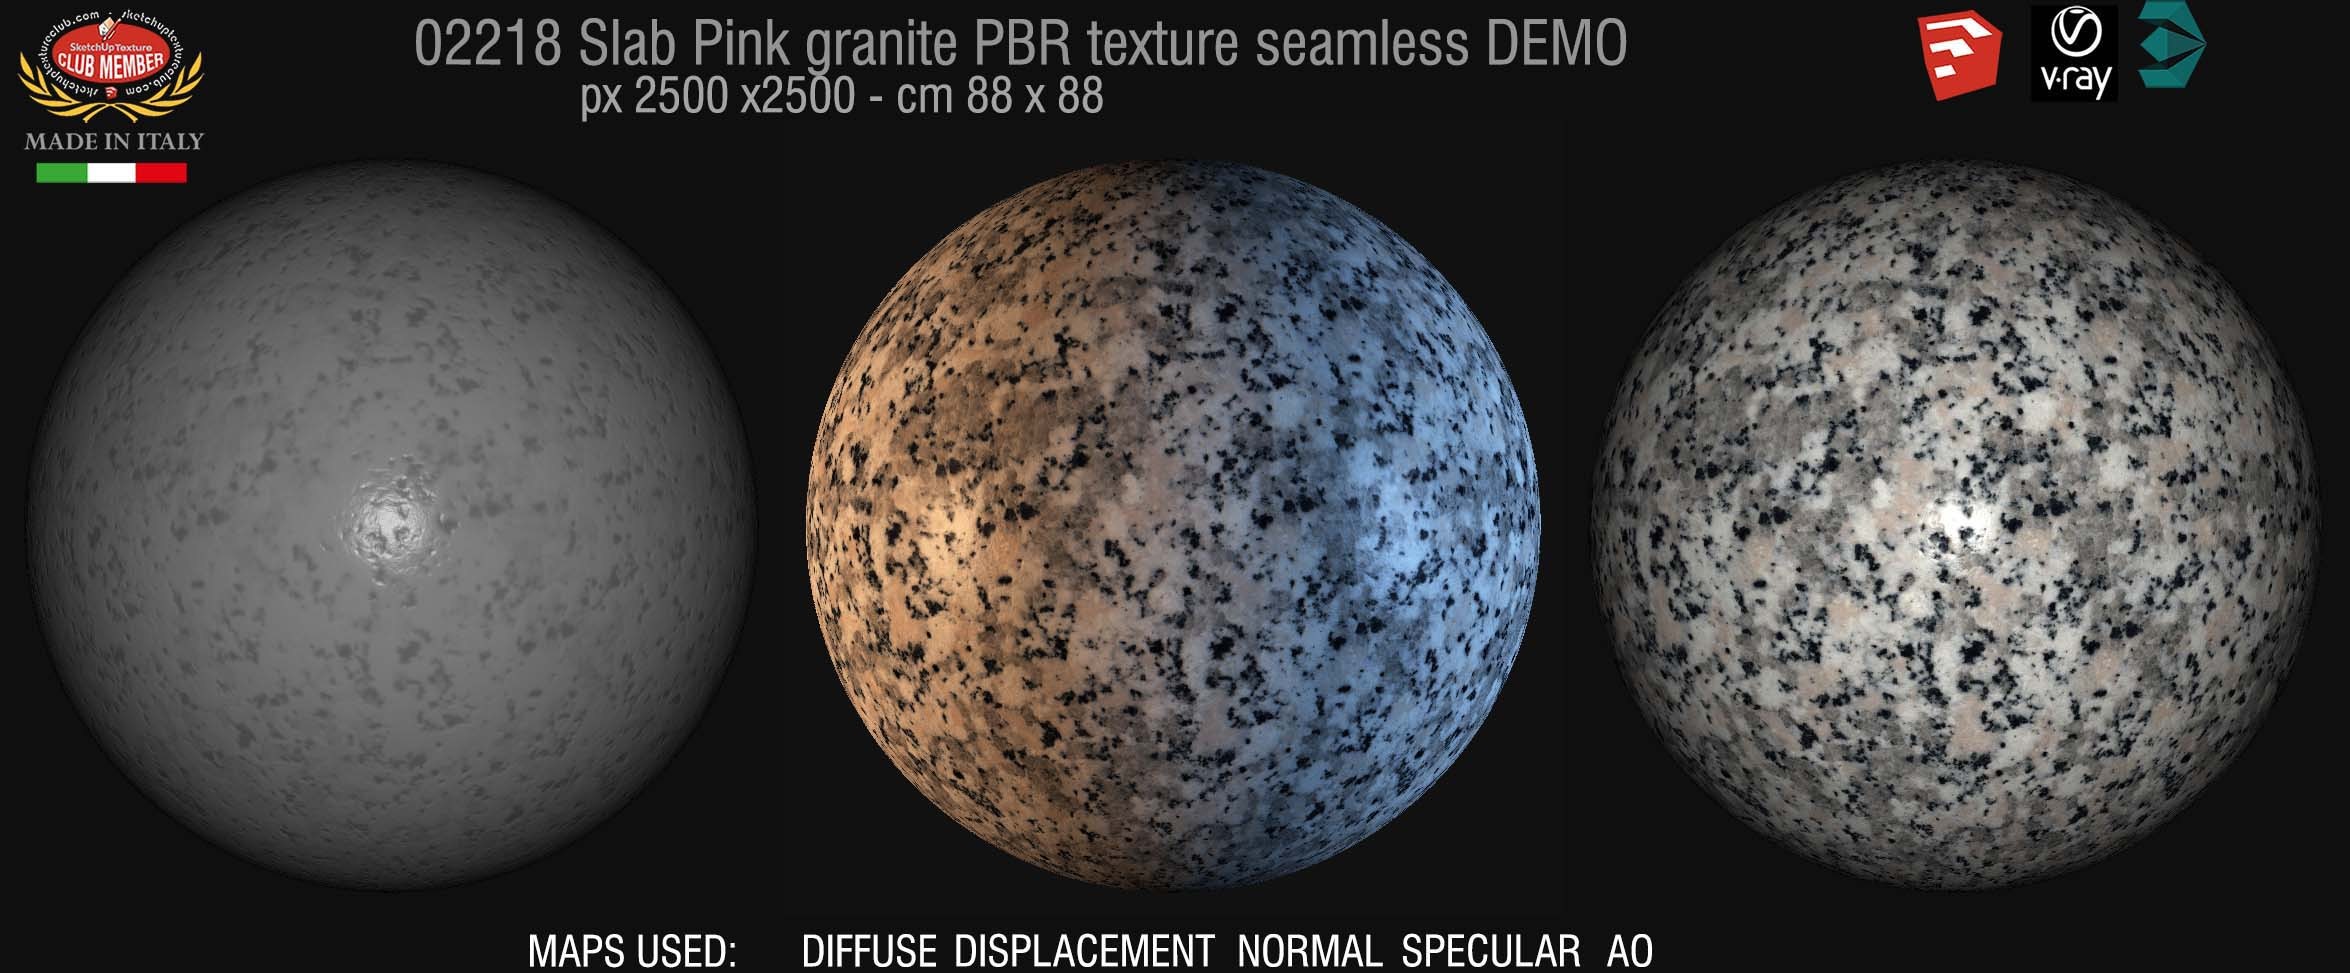 02218 slab pink granite PBR texture seamless DEMO